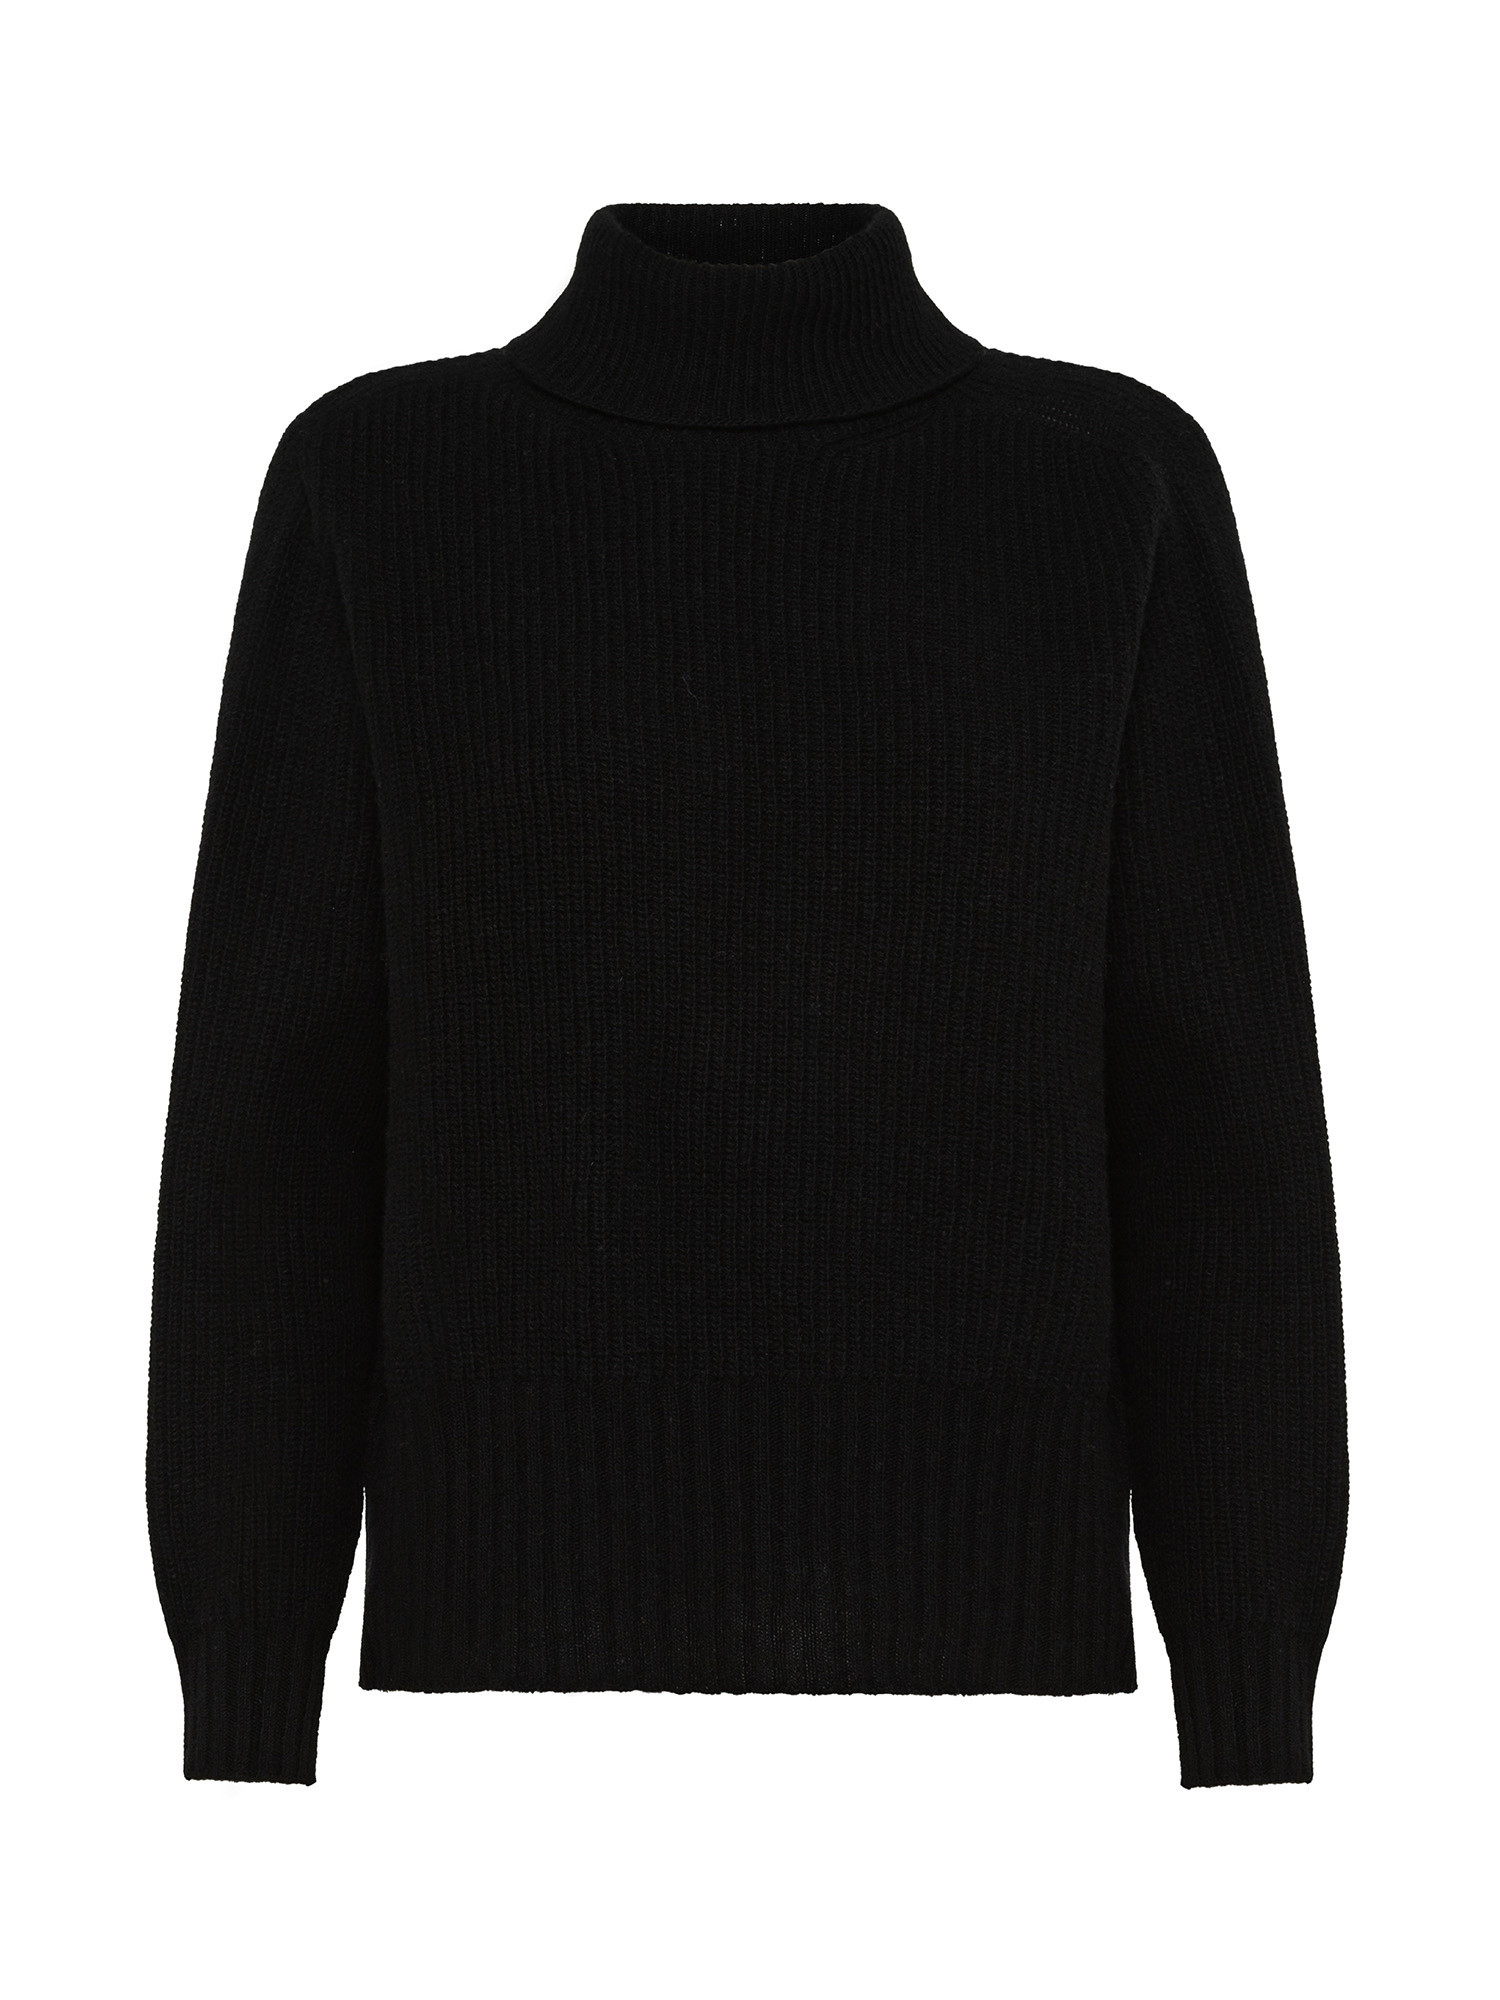 K Collection - Carded wool turtleneck pullover, Black, large image number 1